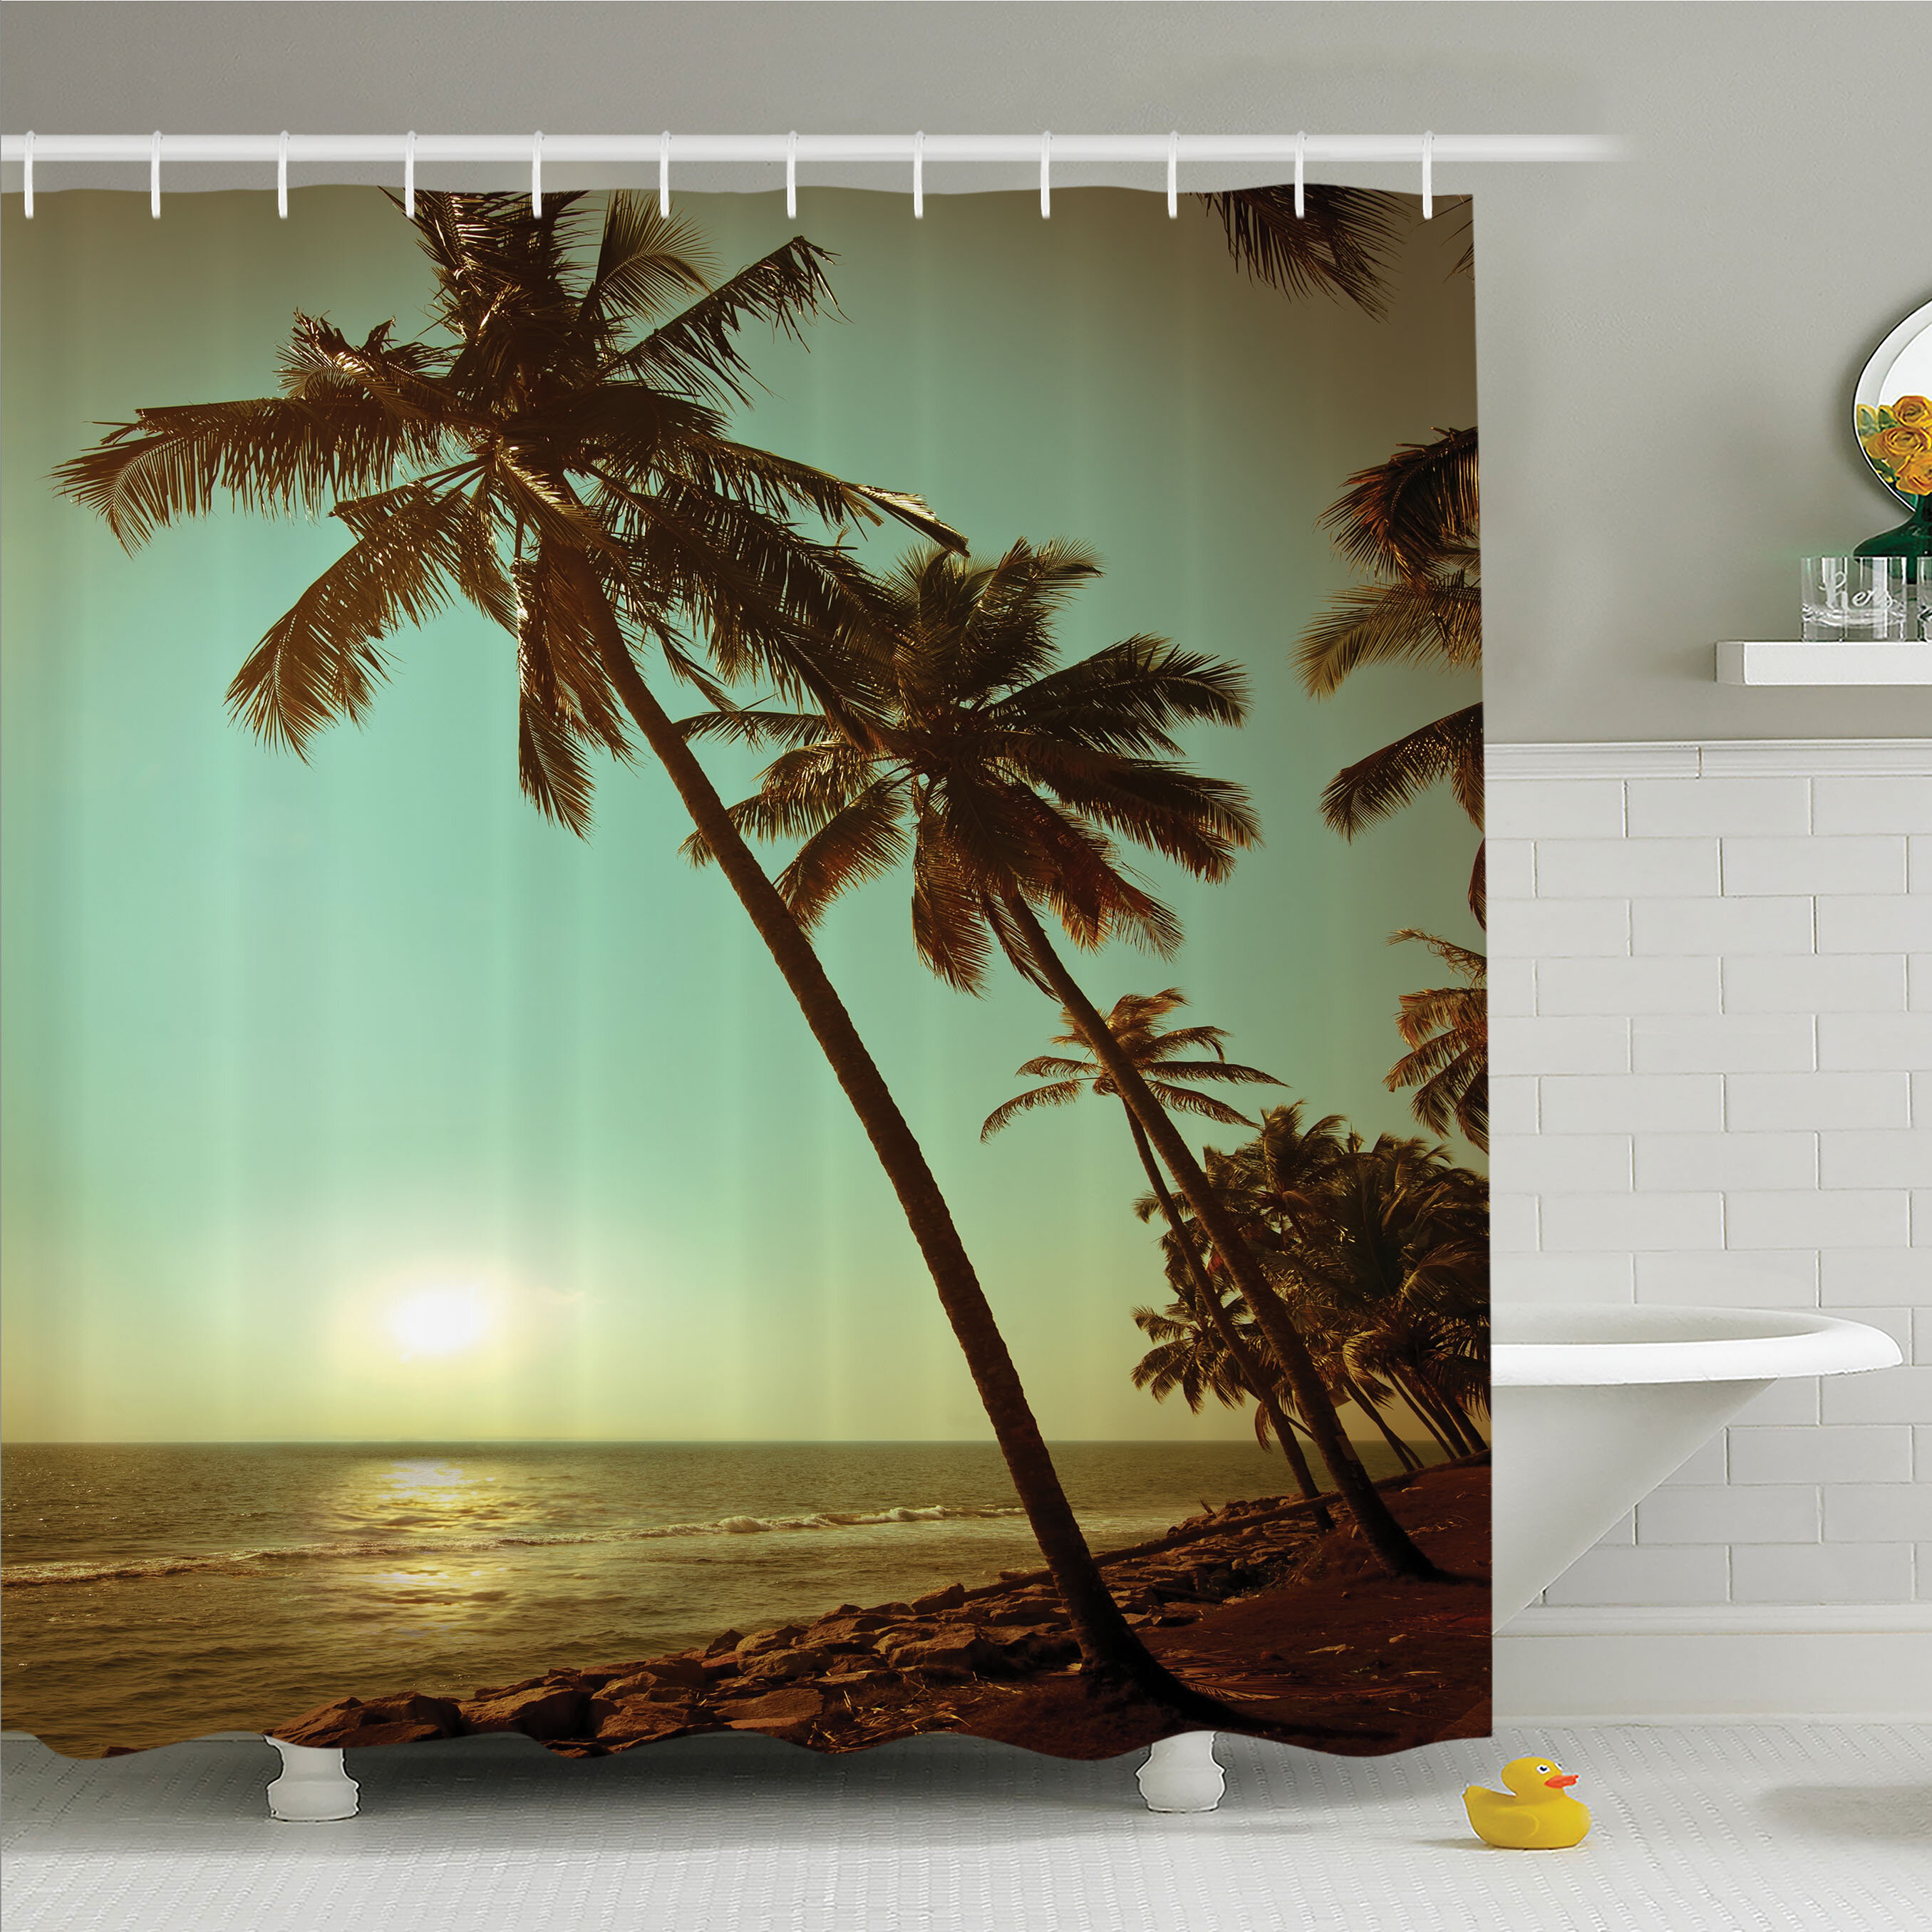 Tropical Beach Green Palm Trees Shower Curtain Set Bathroom Waterproof Fabric 